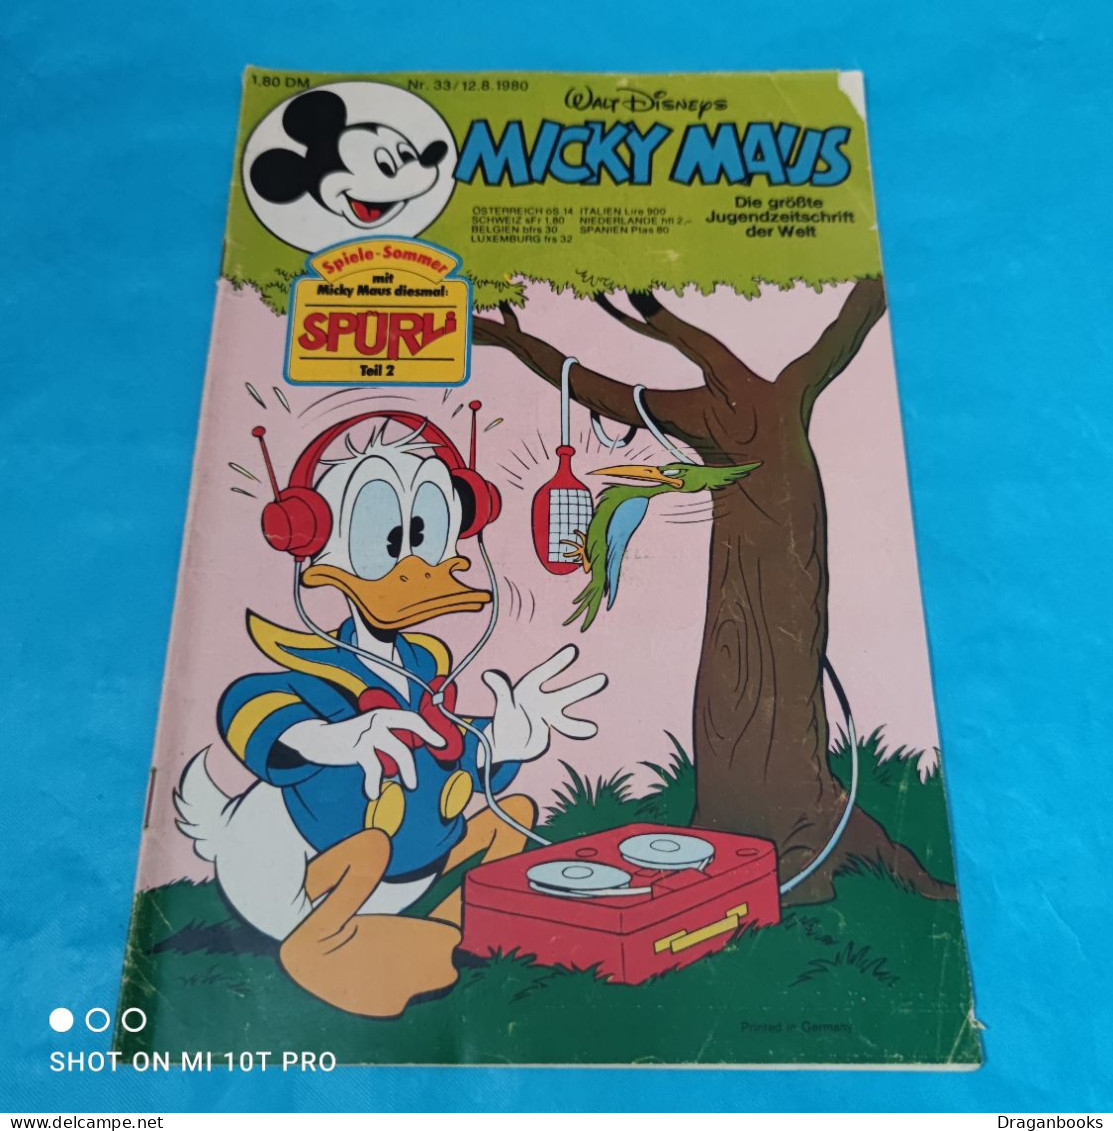 Micky Maus Nr. 33 - 12.8.1980 - Walt Disney